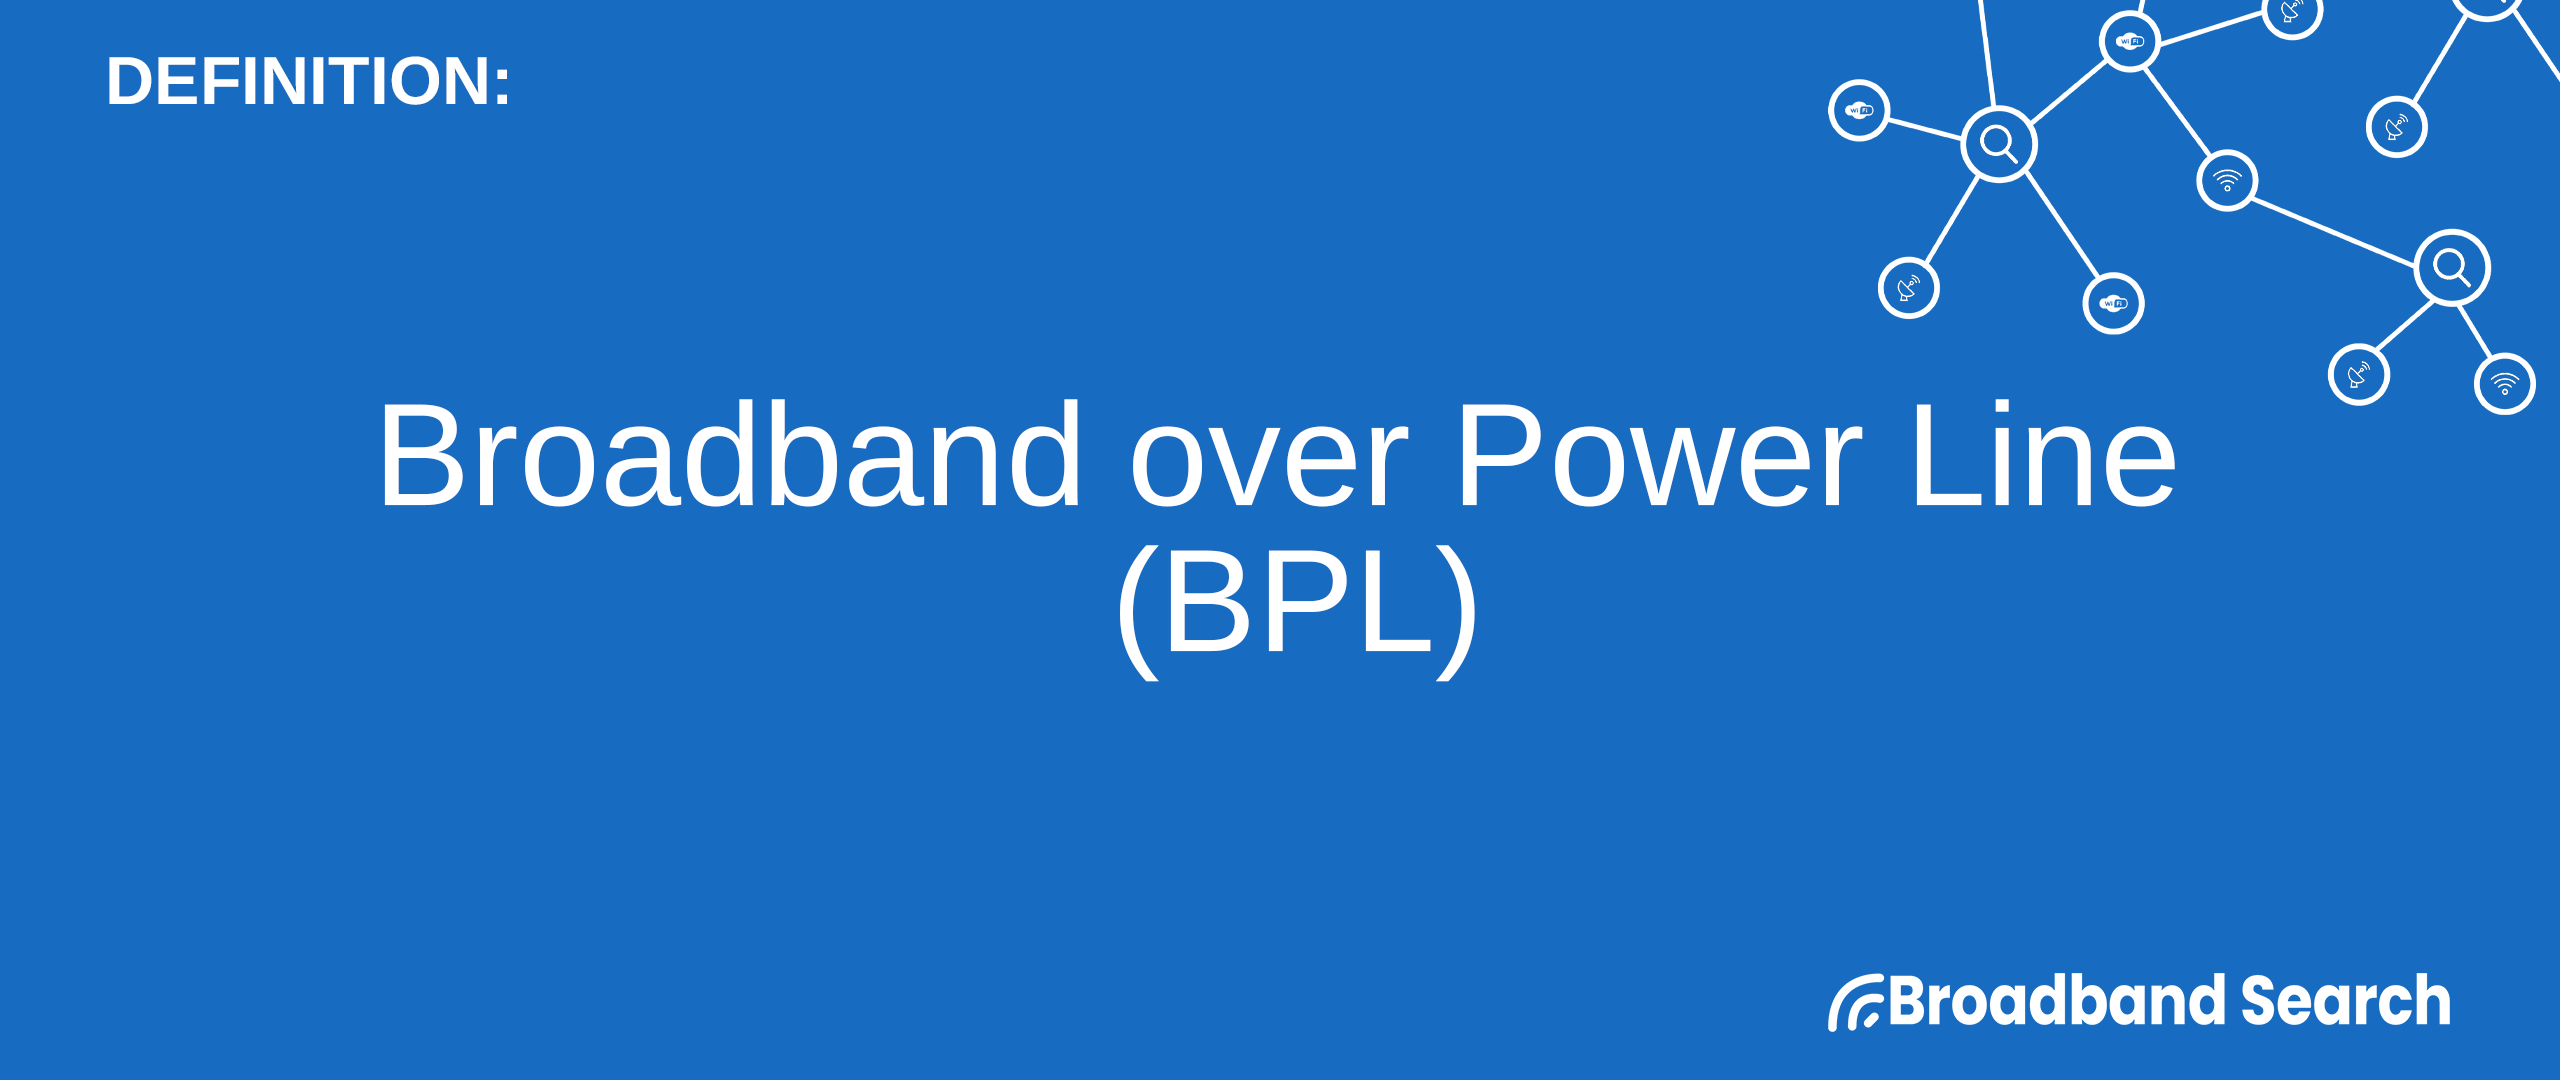 Broadband over Power Line (BPL): An Emerging Technology for Bangladesh